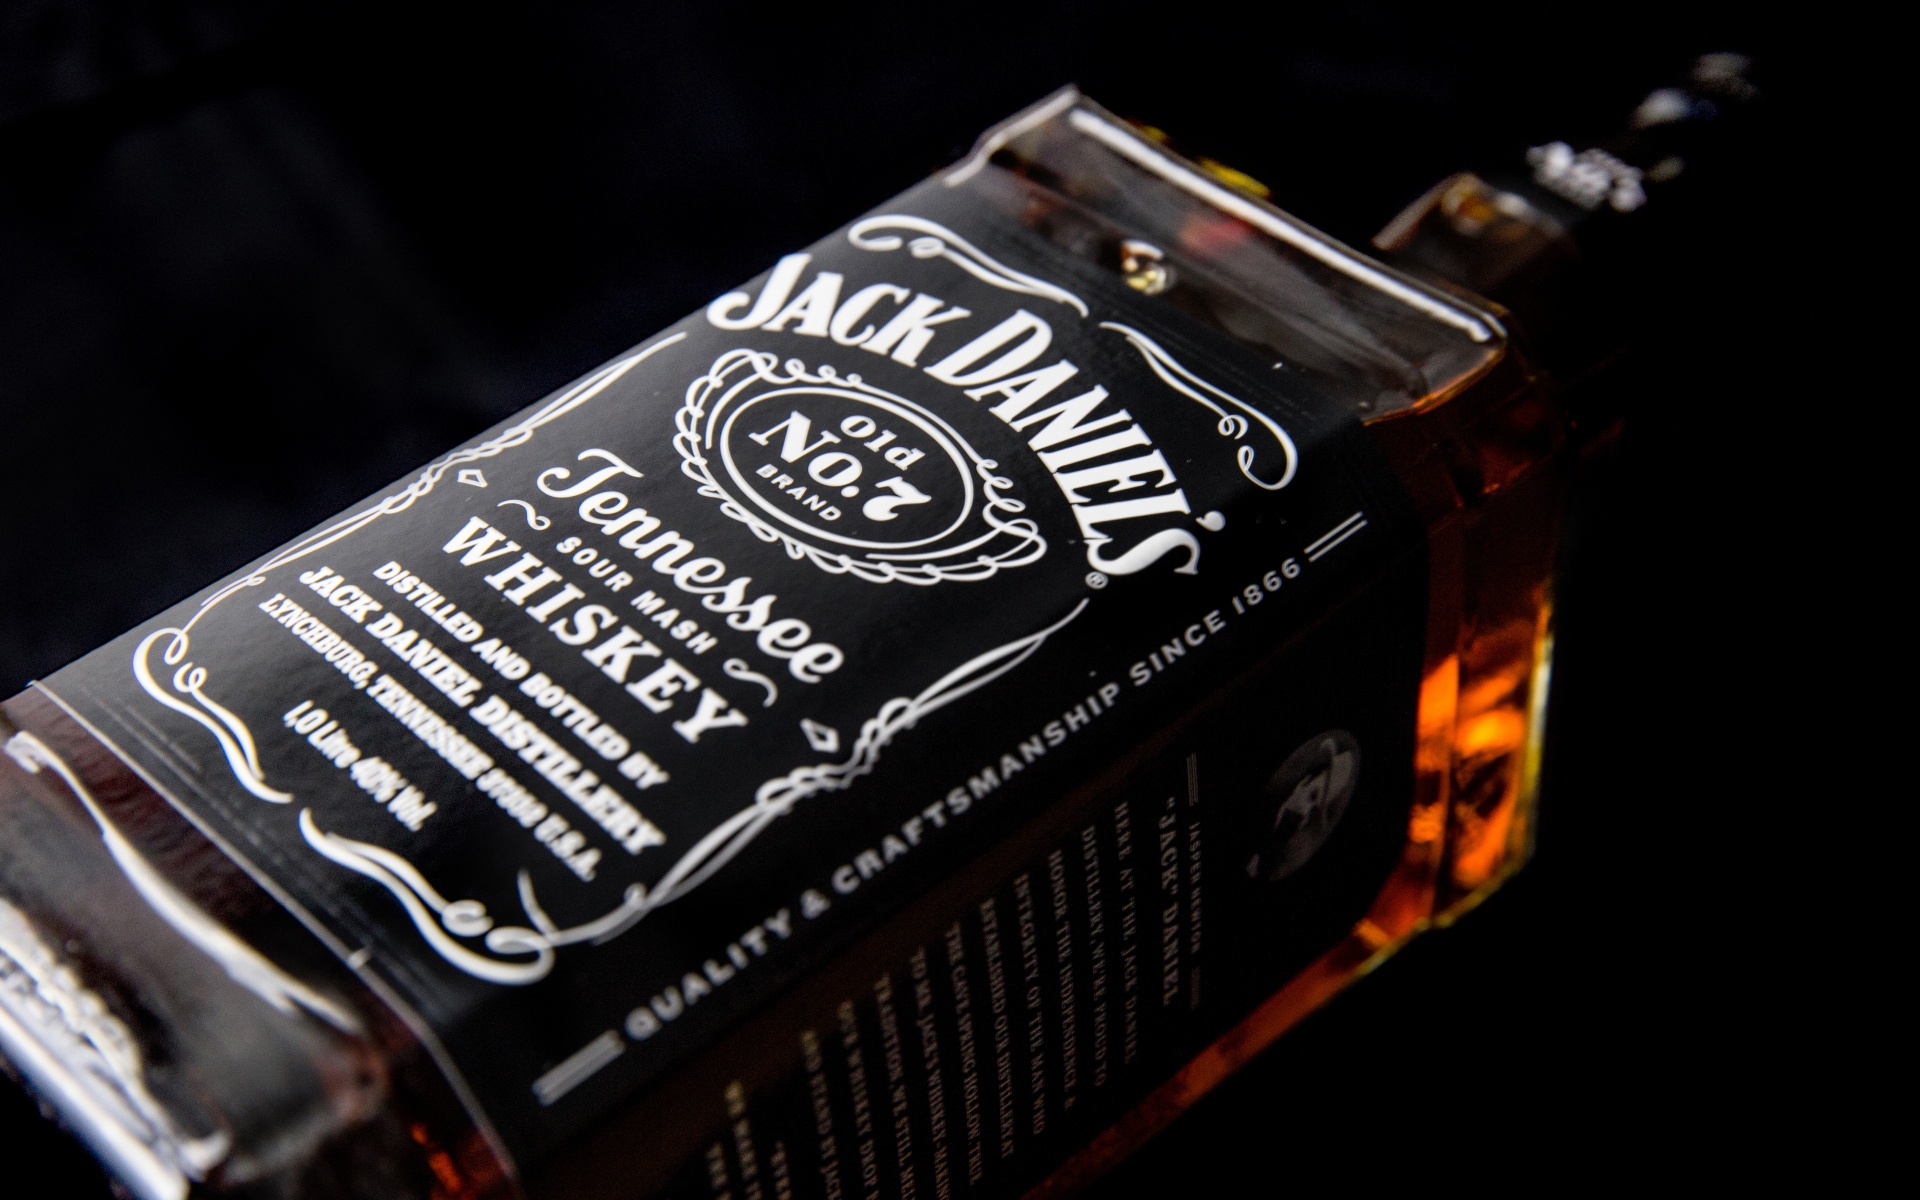 General 1920x1200 drink Jack Daniel's whiskey alcohol closeup